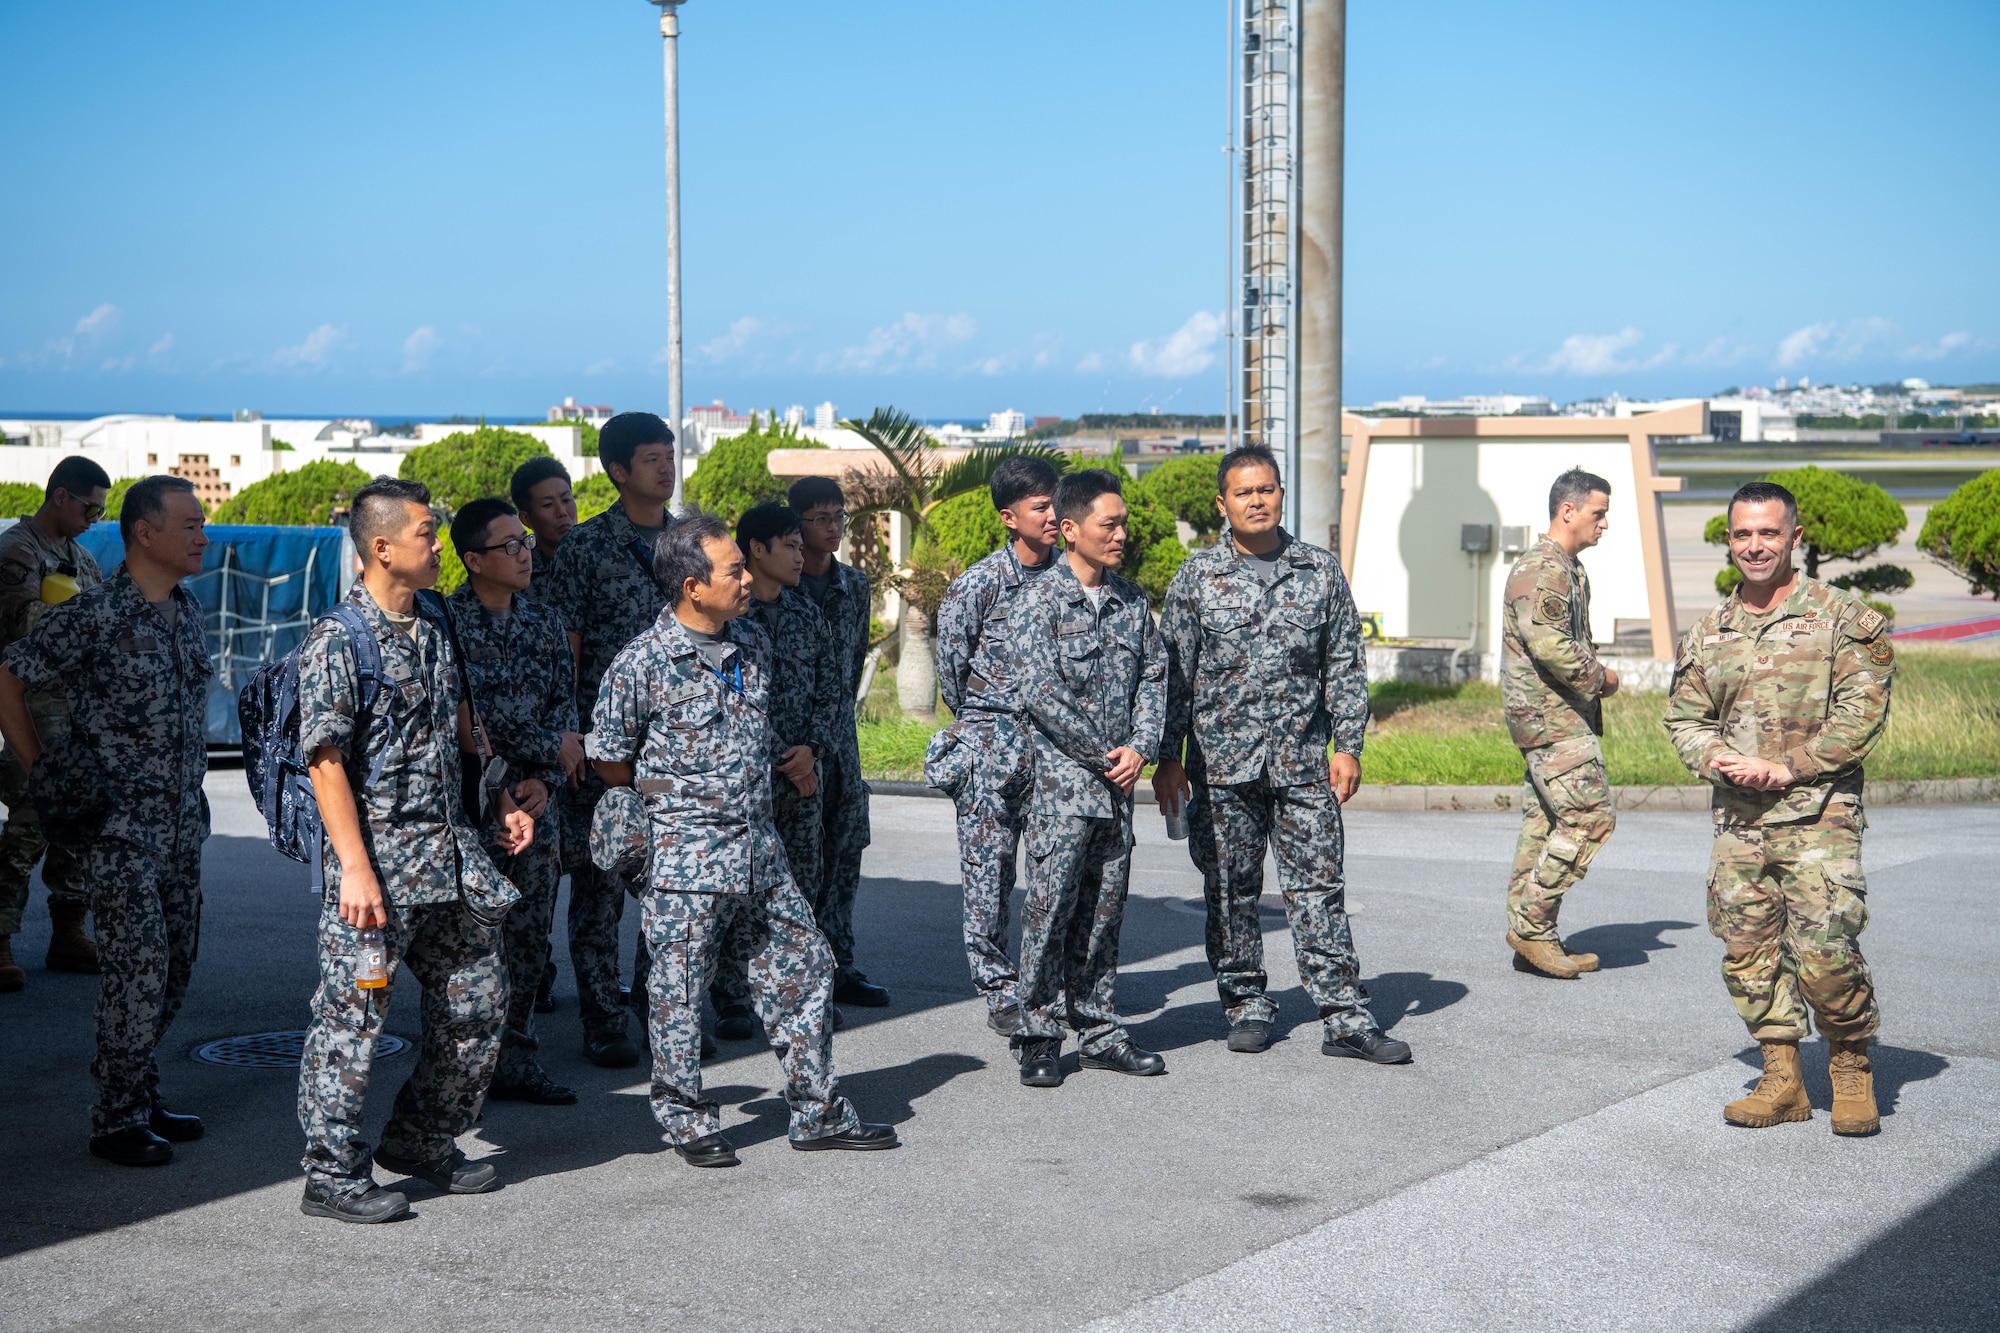 U.S. Air Force Tech. Sgt. Brandon Metz guides members of the Japan Air Self-Defense Force during a tour of Kadena